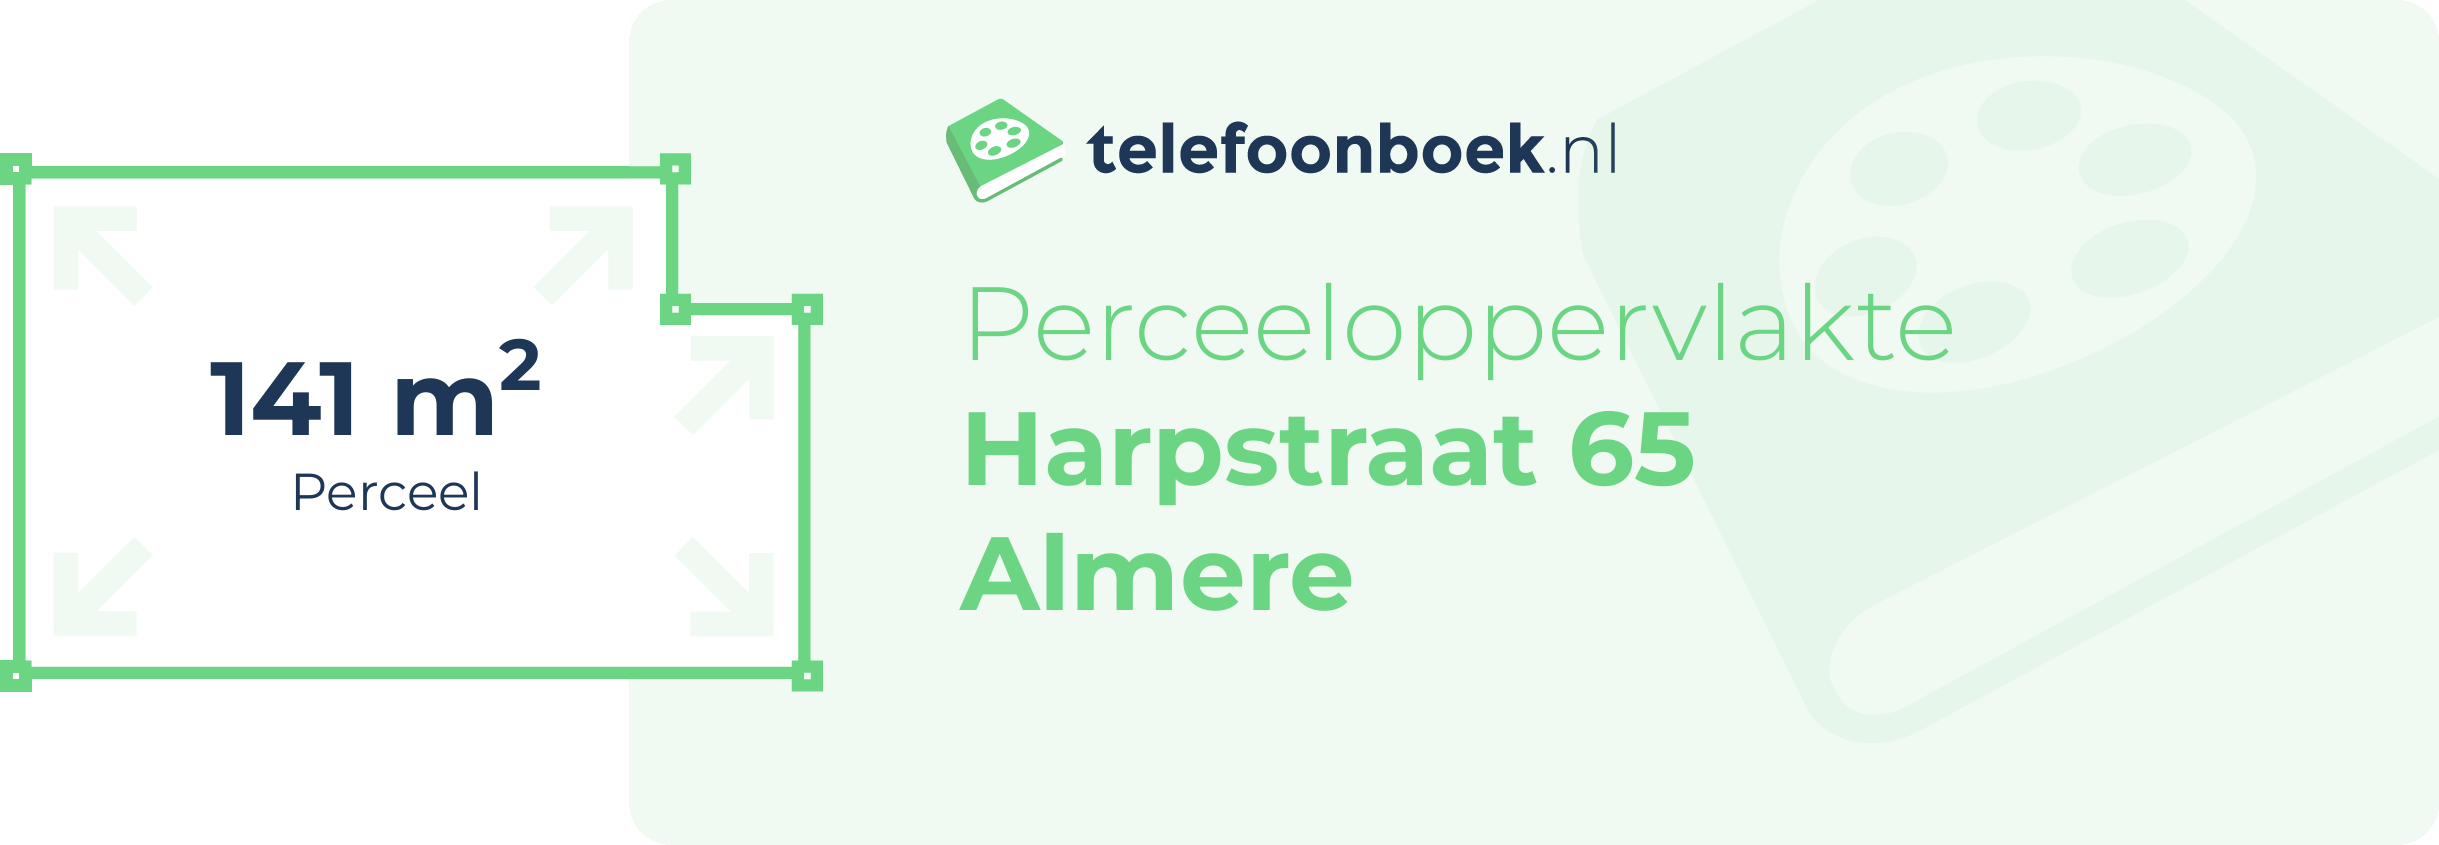 Perceeloppervlakte Harpstraat 65 Almere